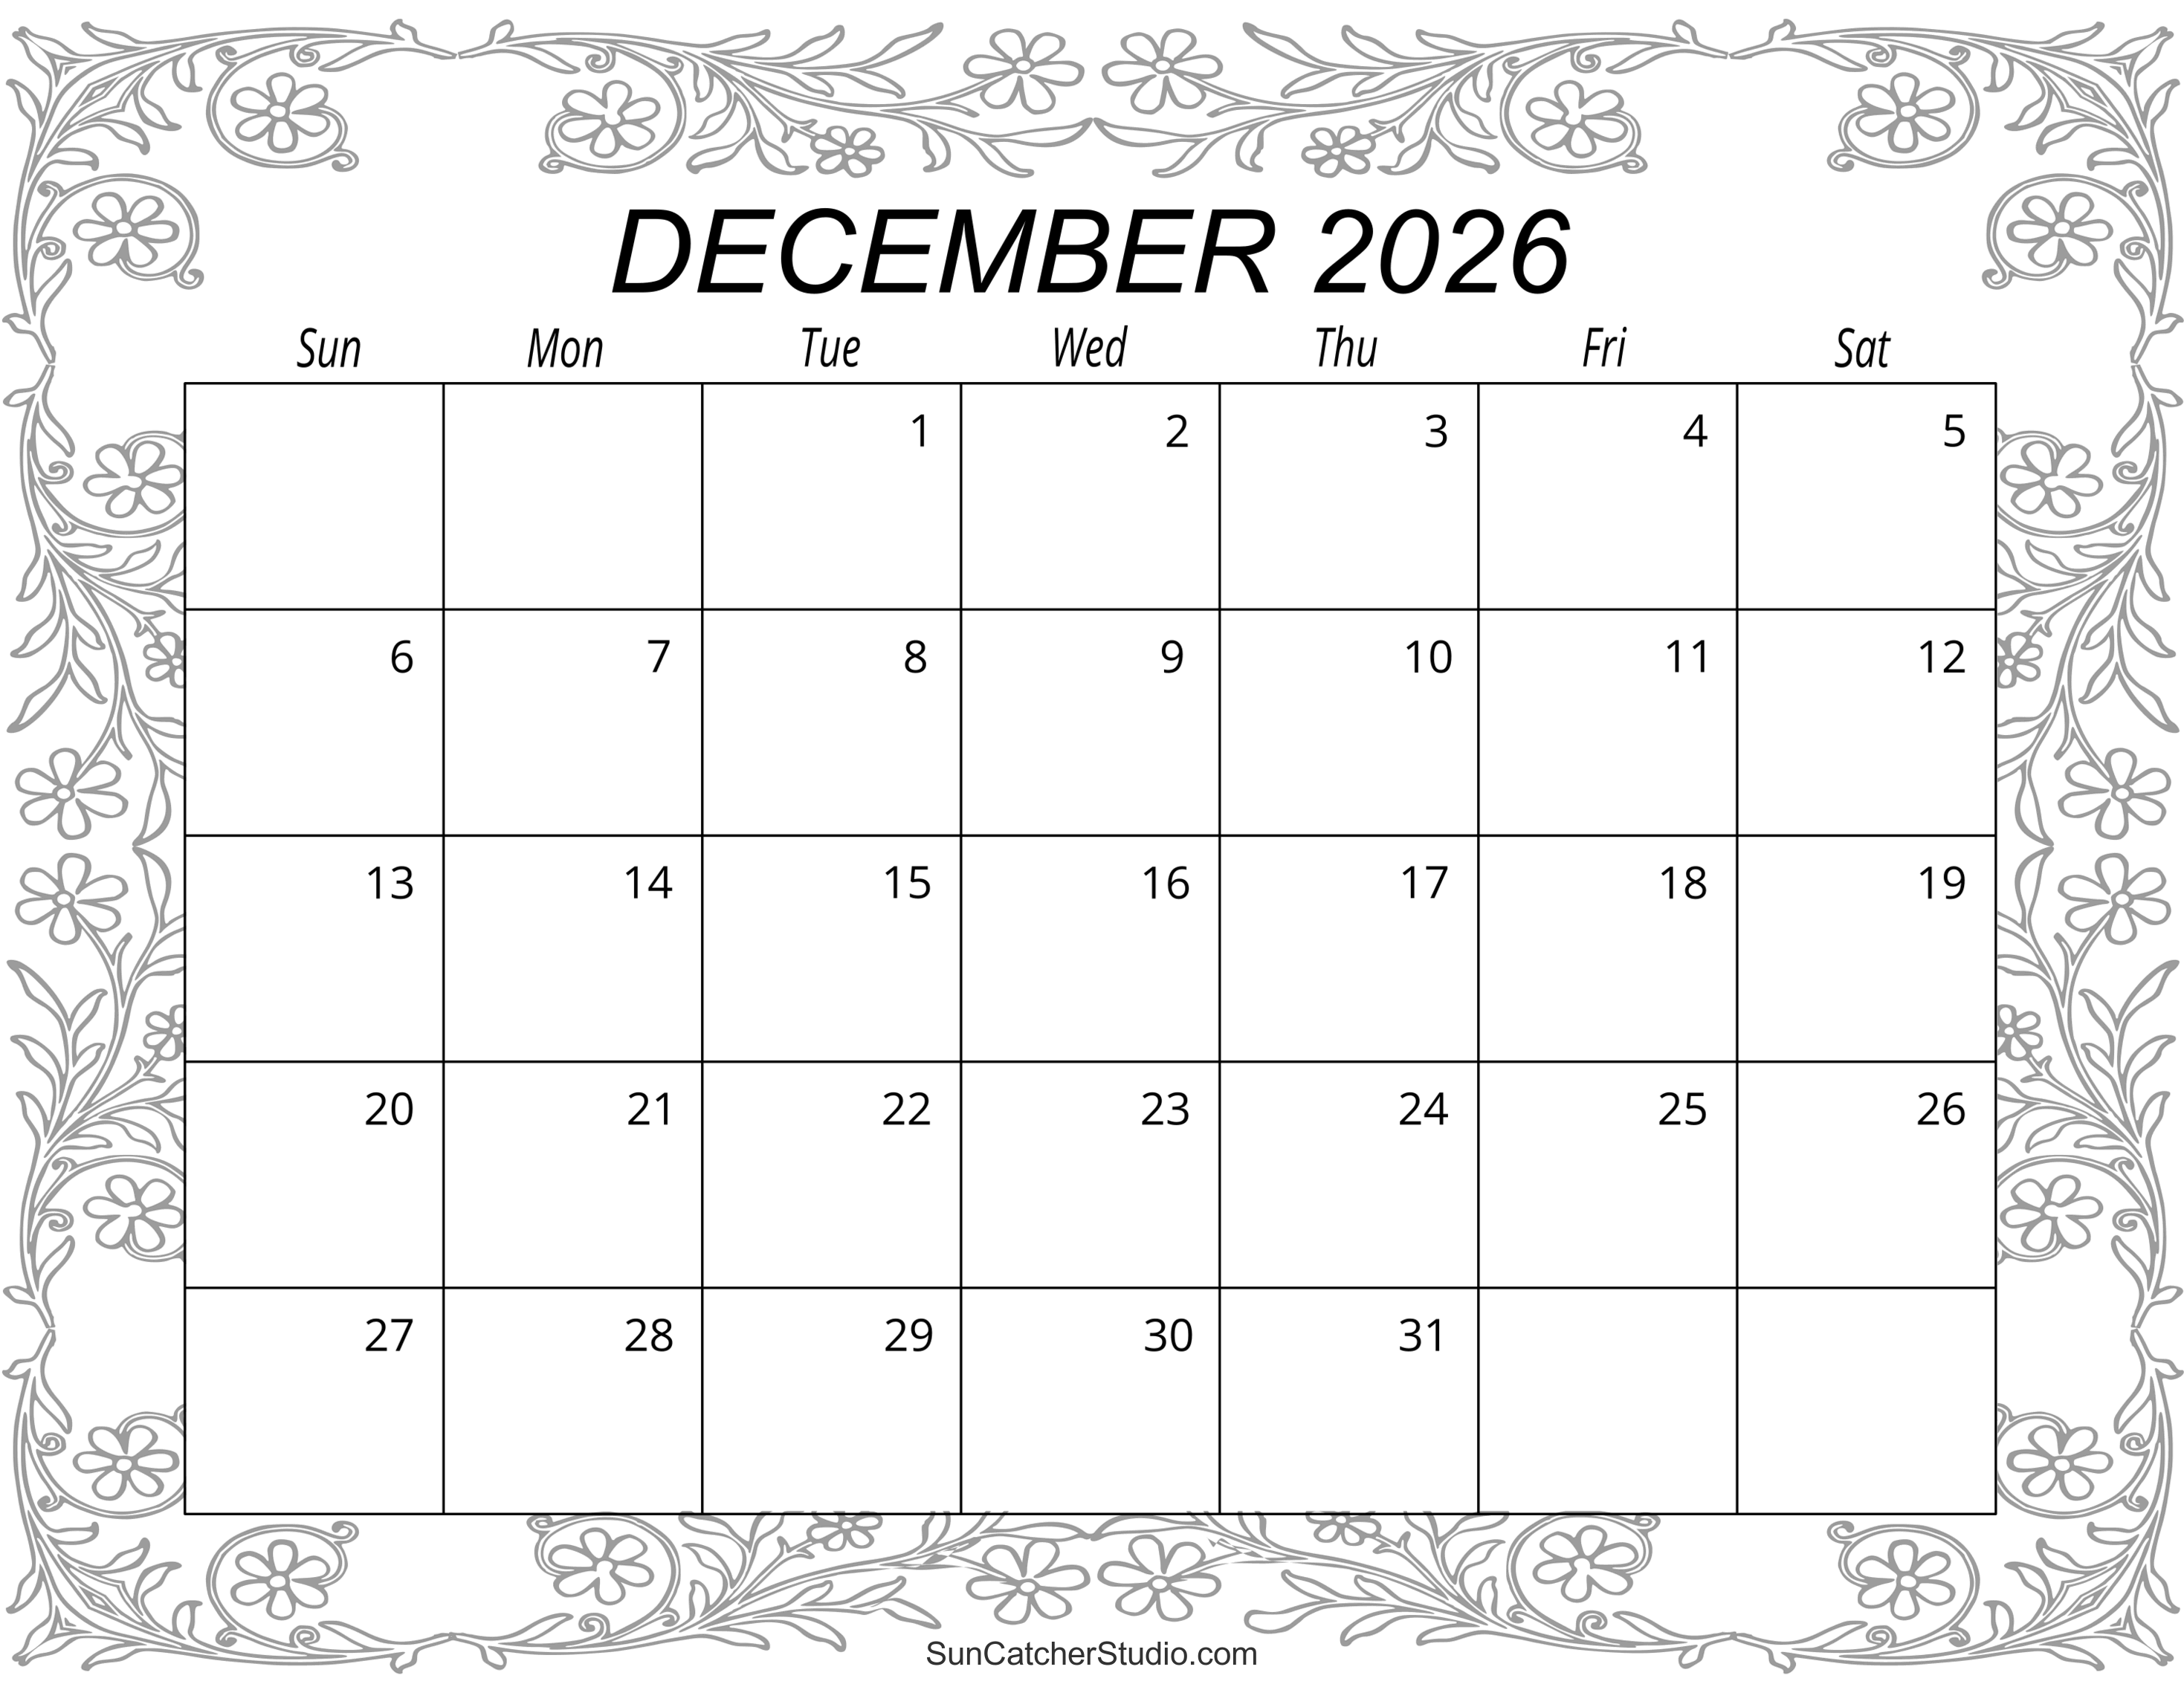 December 2026 Calendar Free Printable Diy Projects Patterns